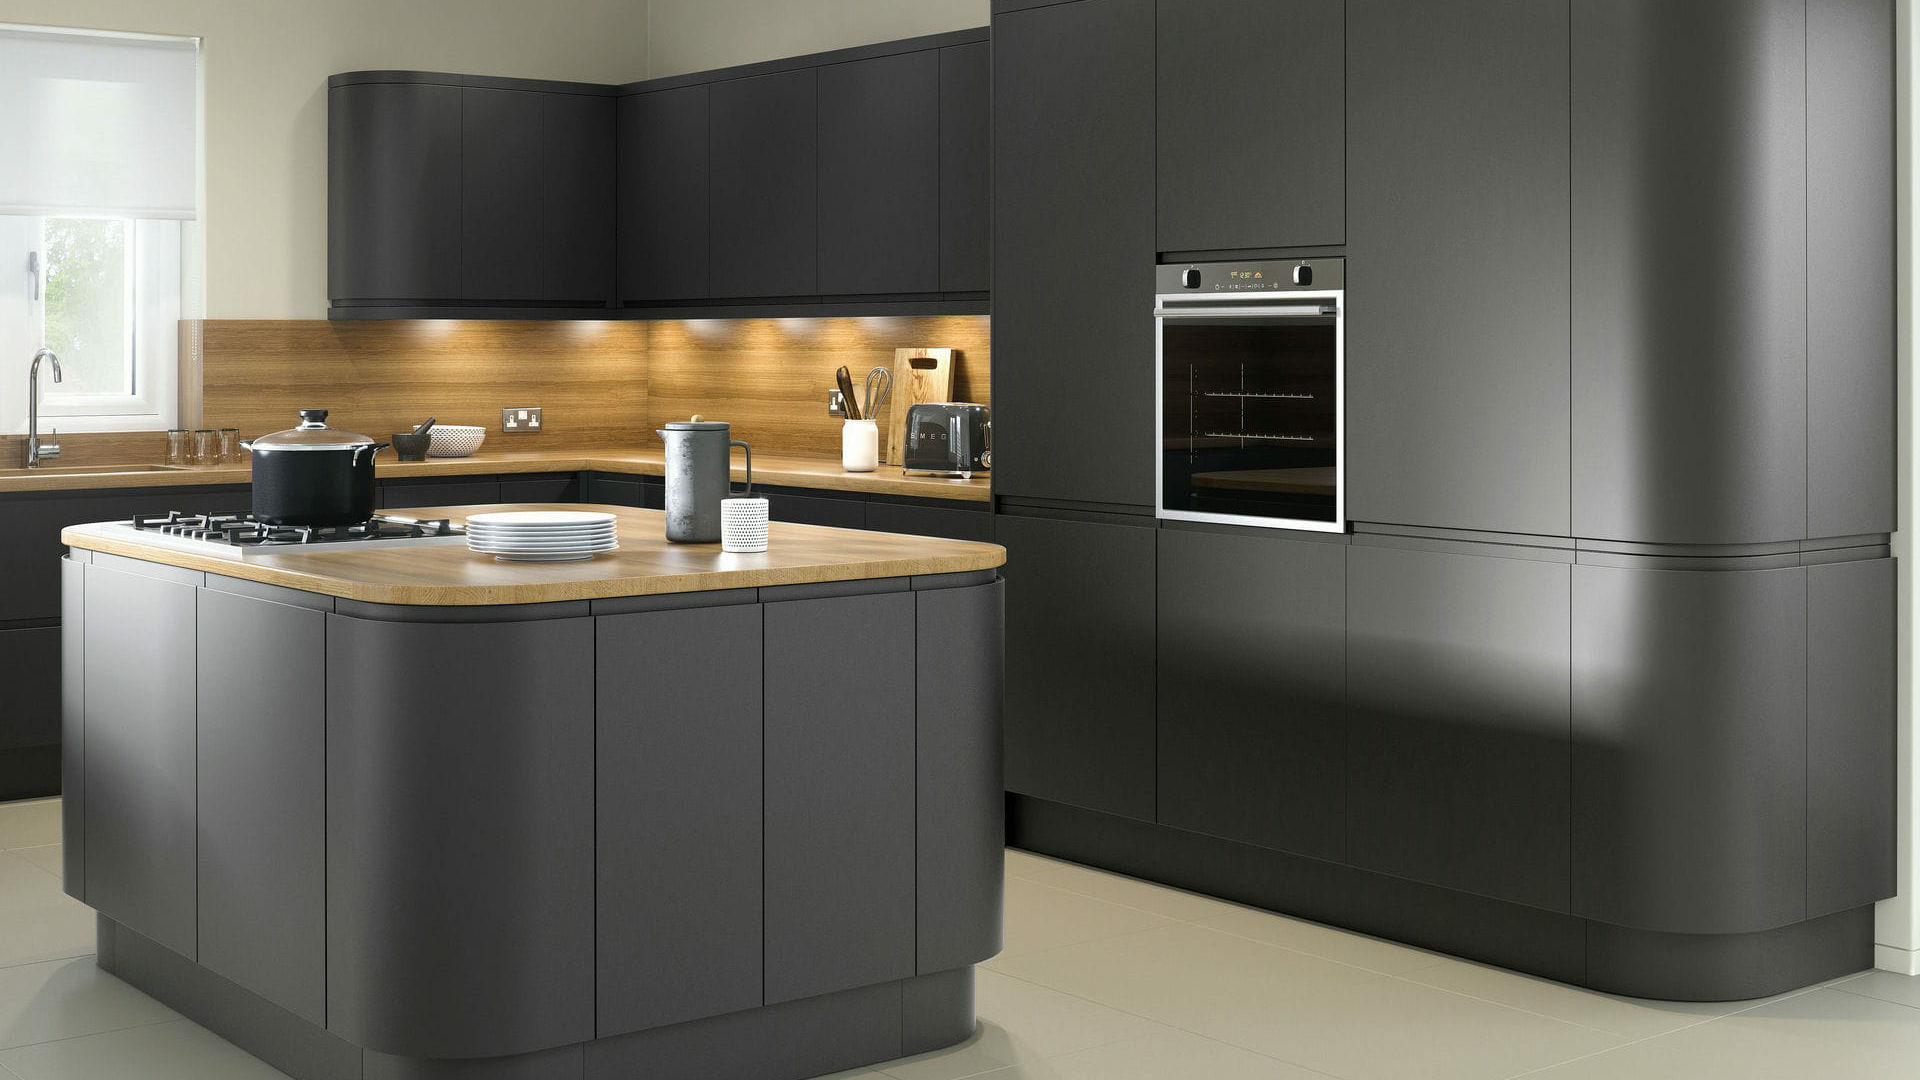 Handleless matt anthracite kitchens providing a subtle yet striking matte finish for an ultra-modern look